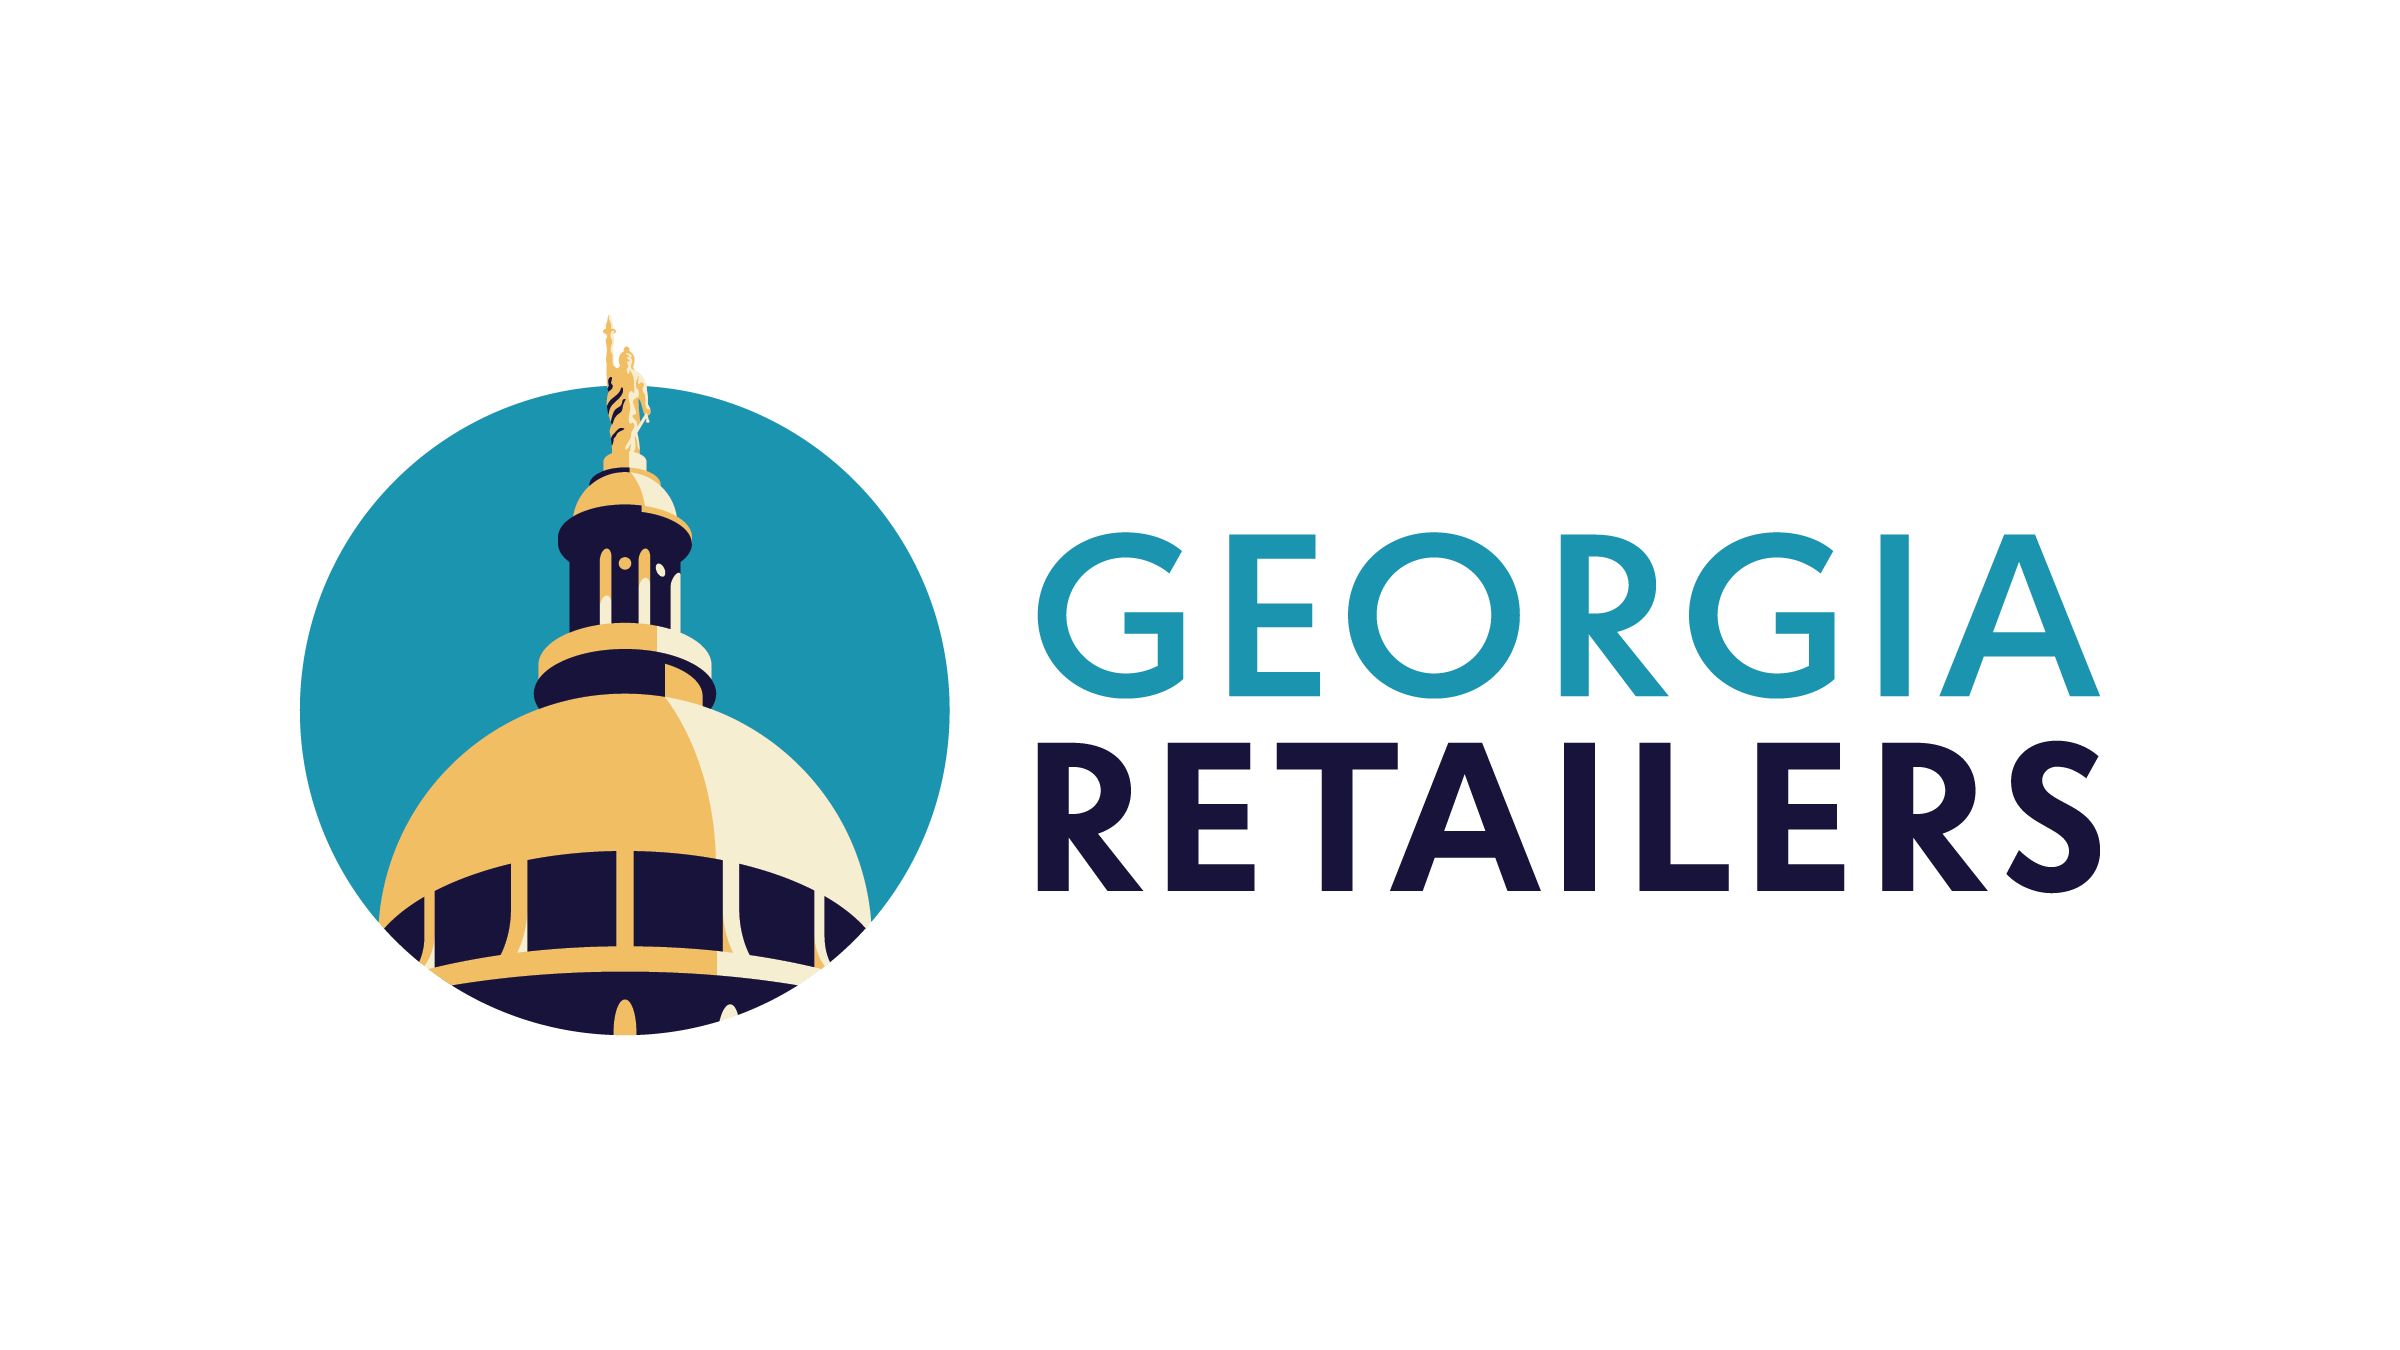 Georgia Retailers logo 2018